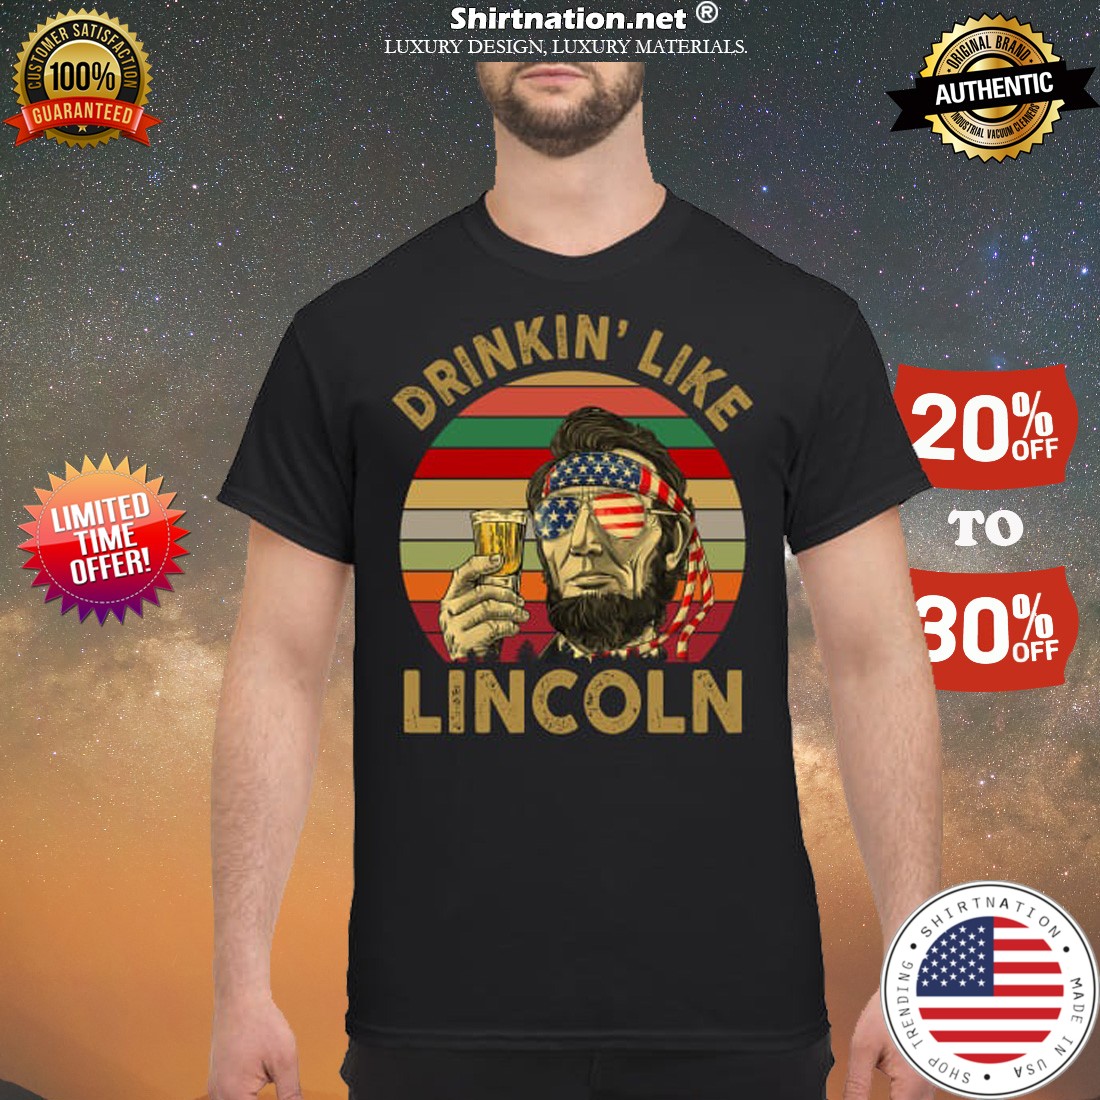 Drinking like Lincoln shirt